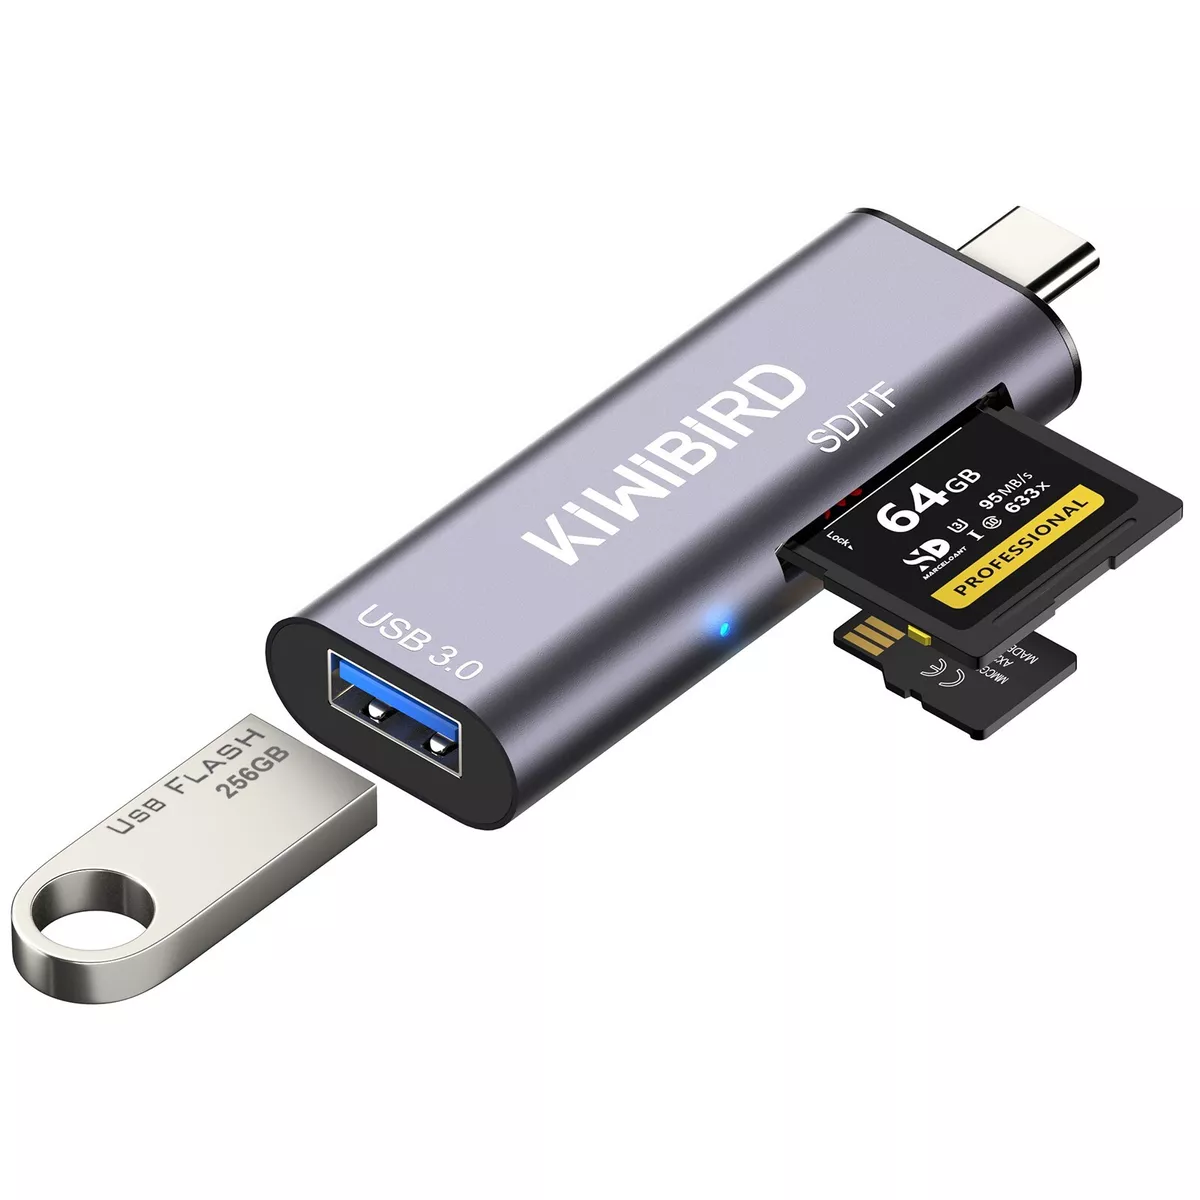 KiWiBiRD USB-C SD Micro SD Memory Card Reader, Type-C to USB 3.0 Female Adapter 5060421780986 eBay